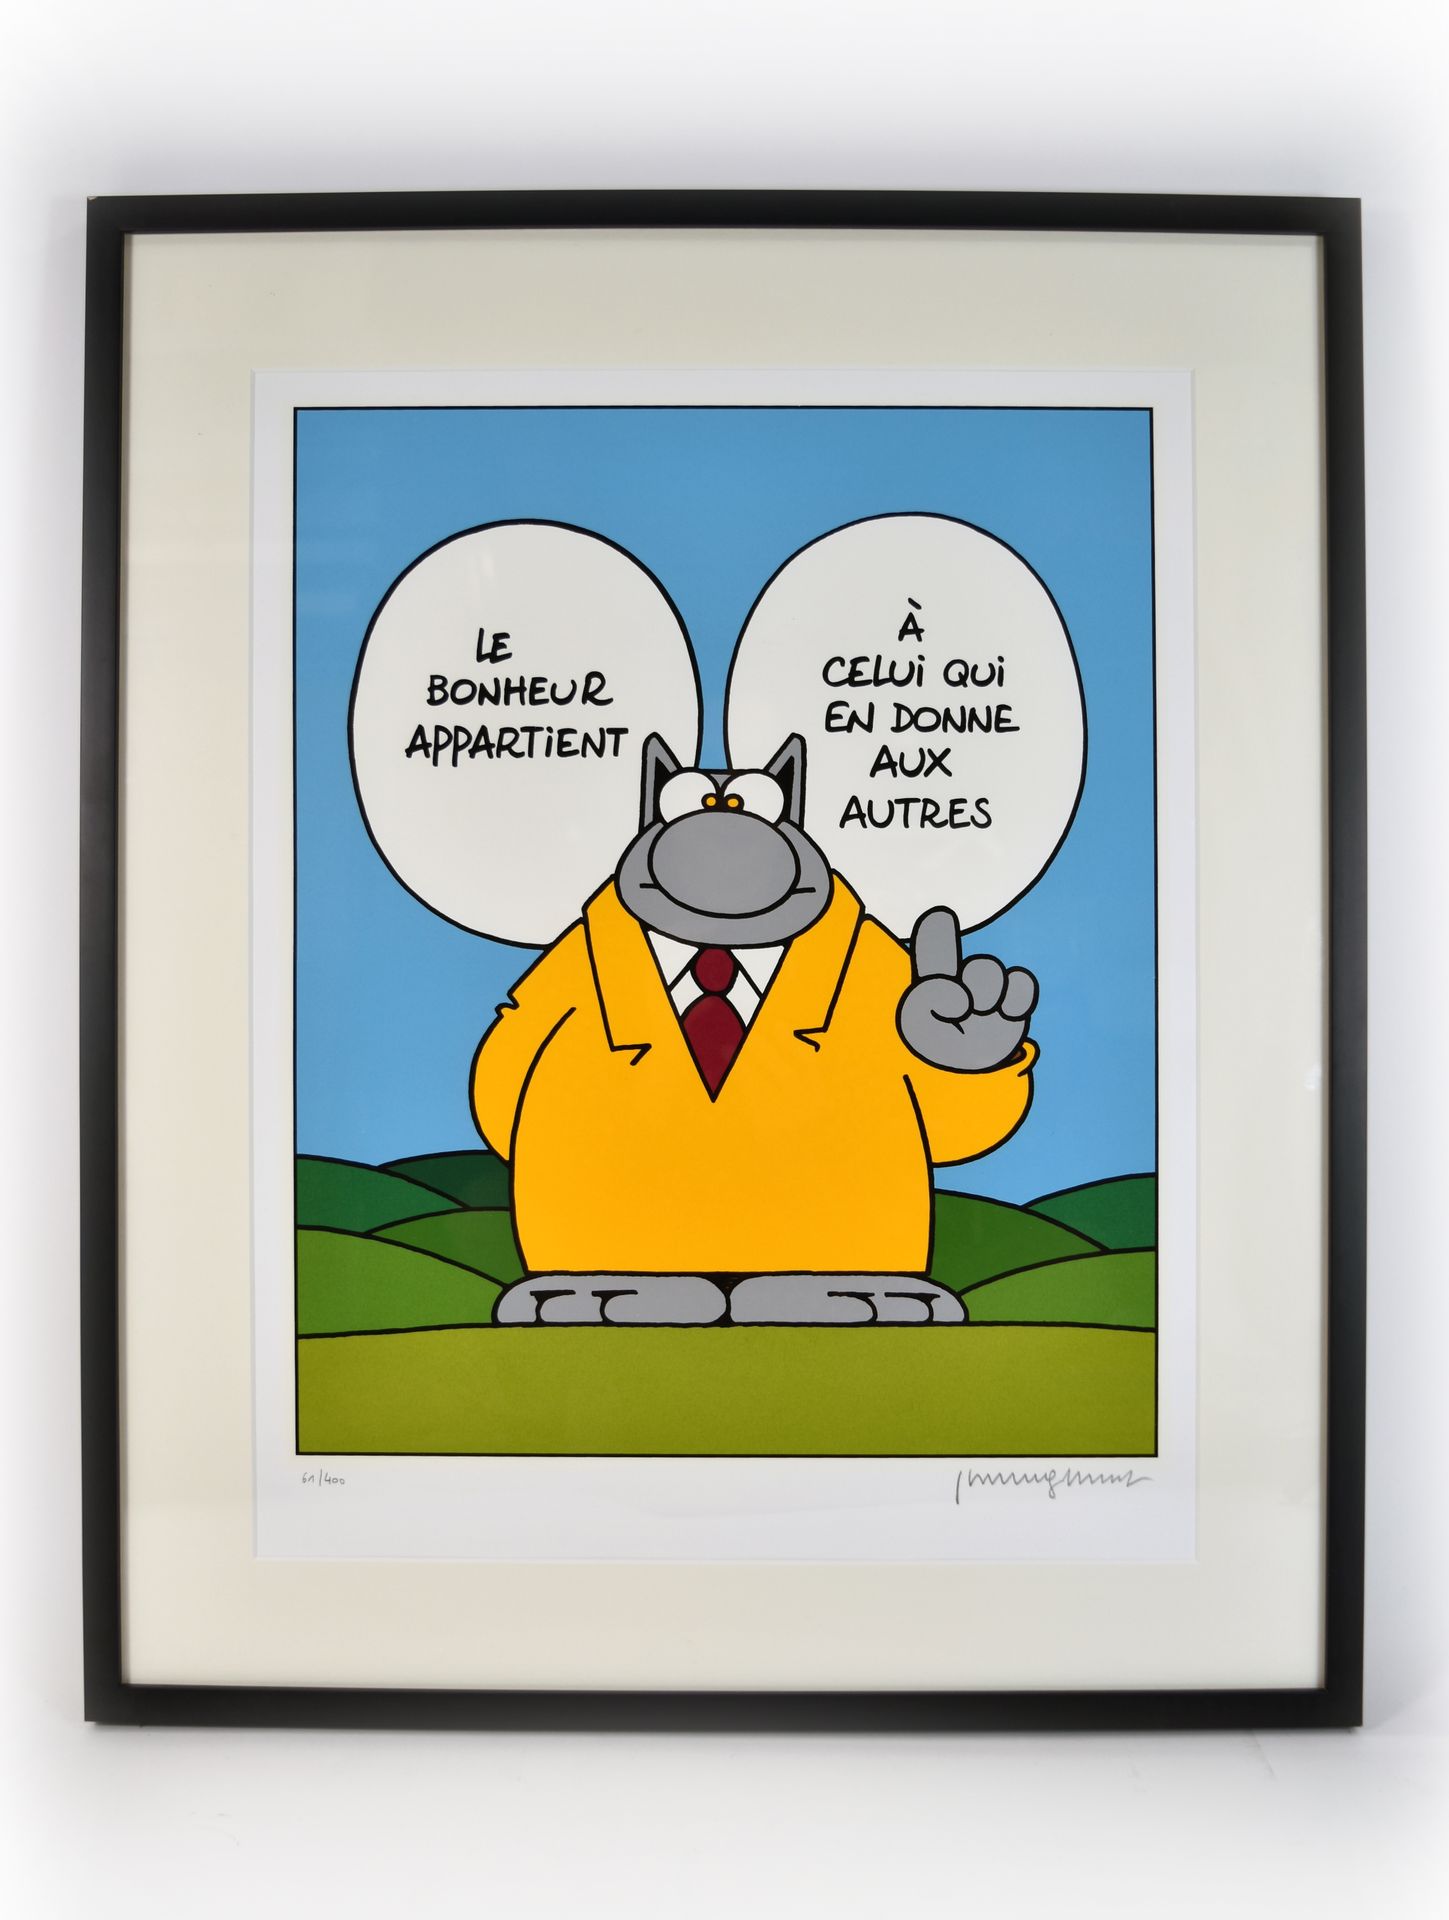 Philippe GELUCK 菲利普-格卢克的丝网印刷品，背面有一幅画："Le chat"（62 x 52厘米）。